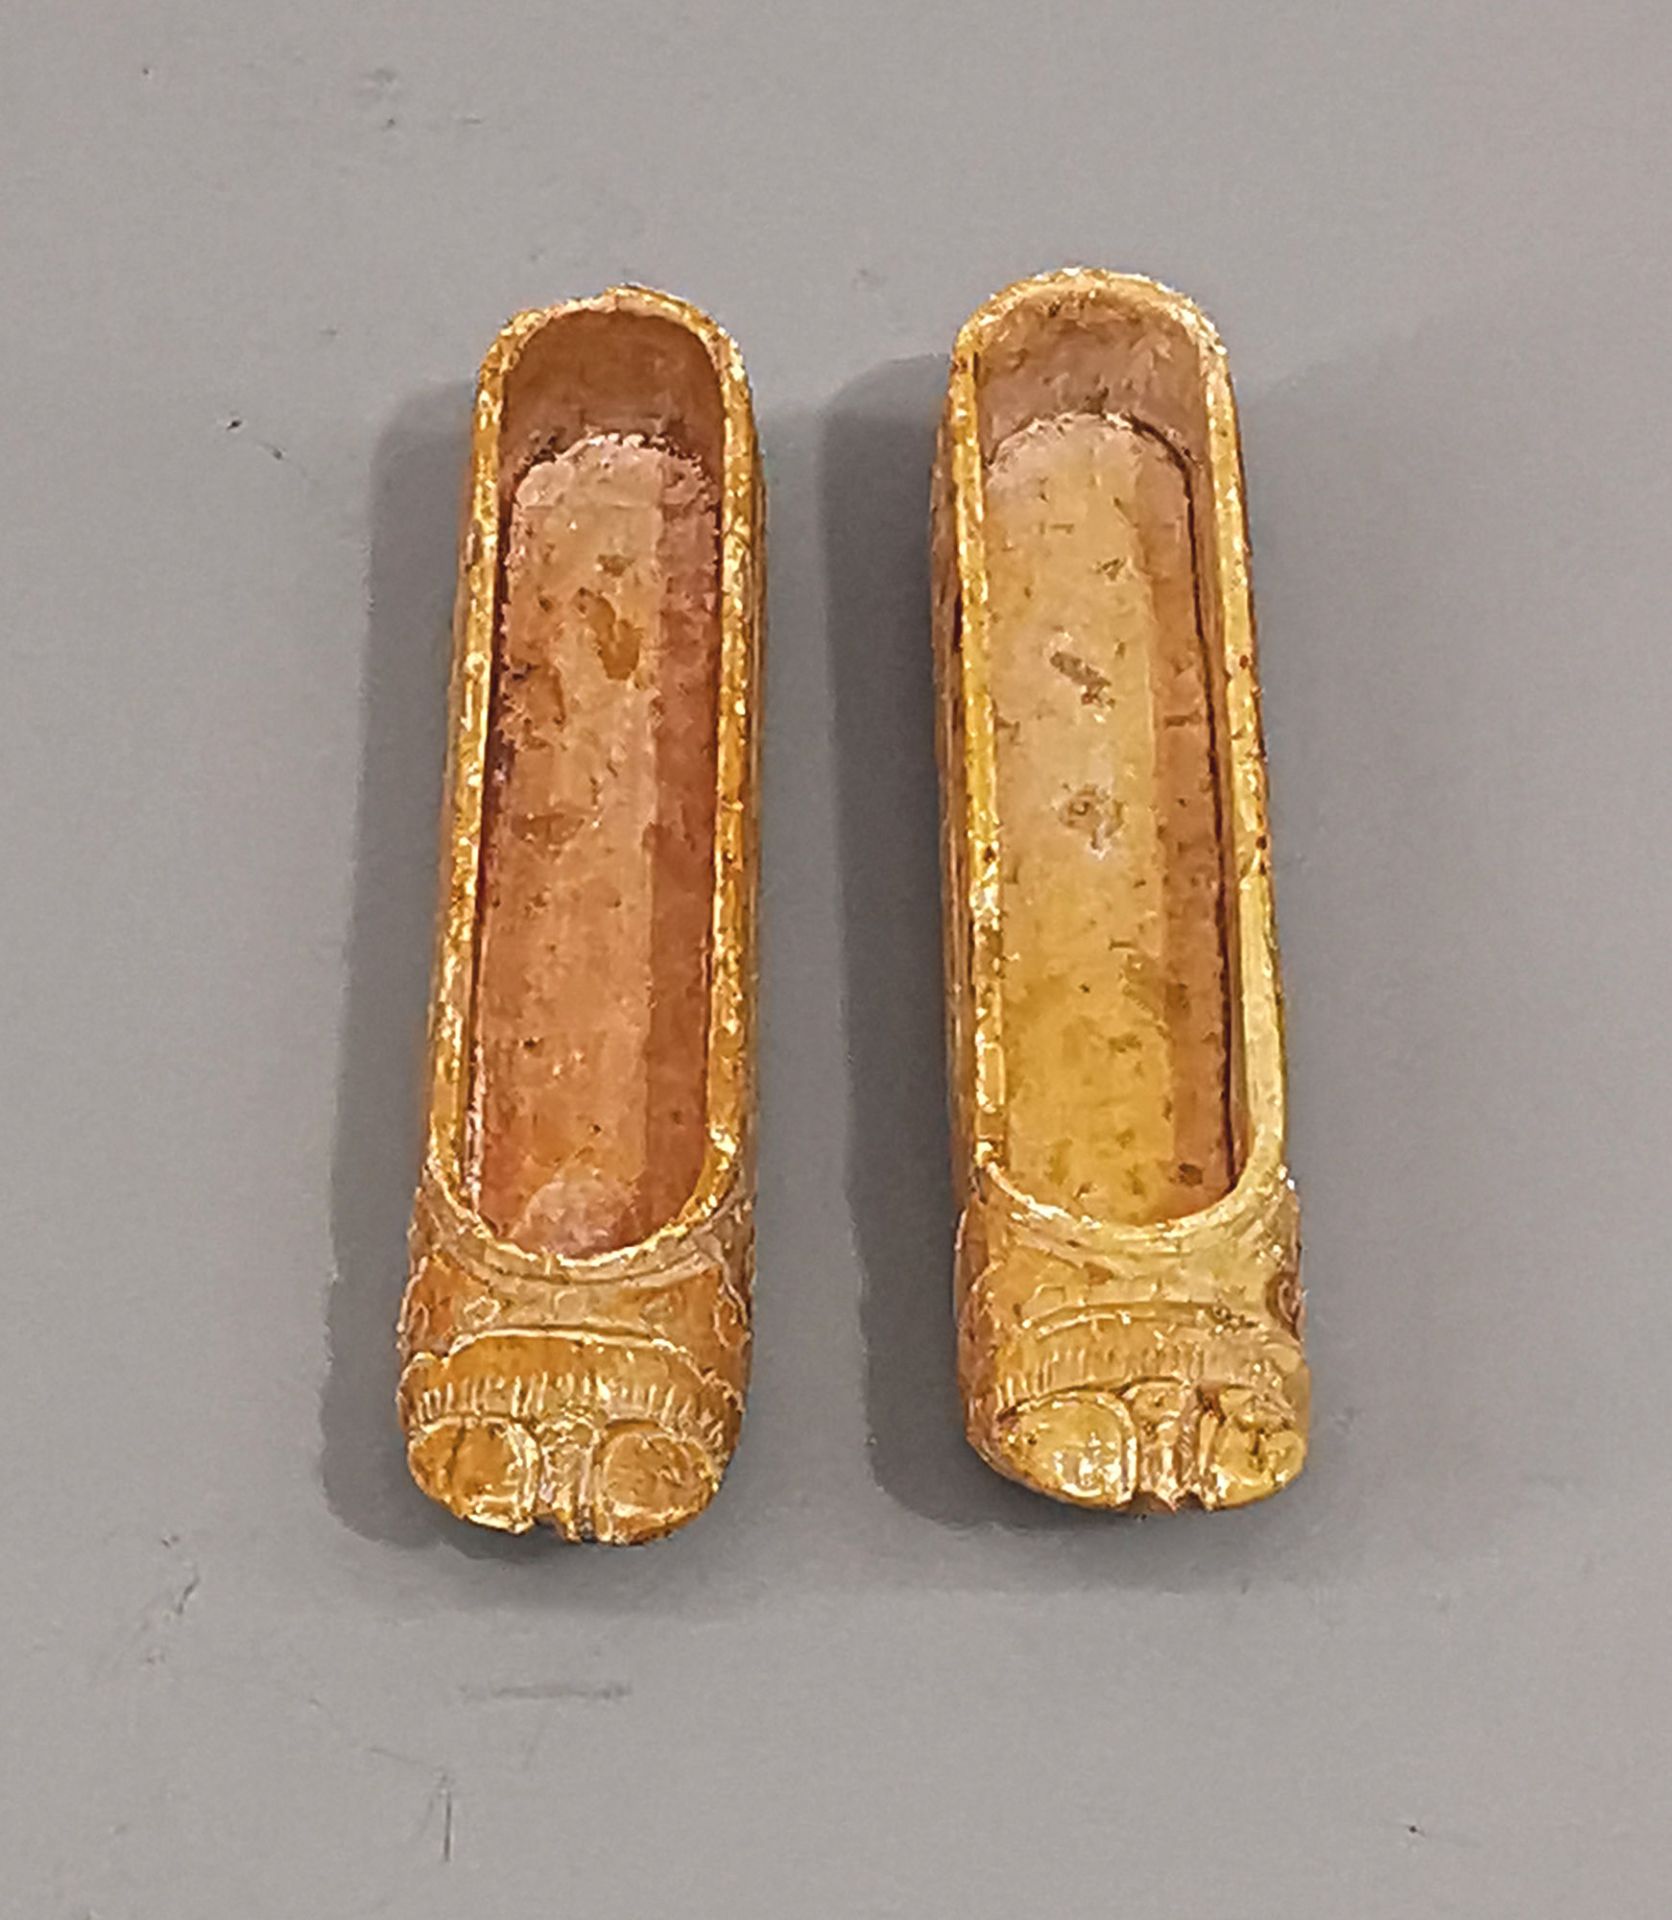 Seltenes Paar Miniatur Schuhe - Image 2 of 4